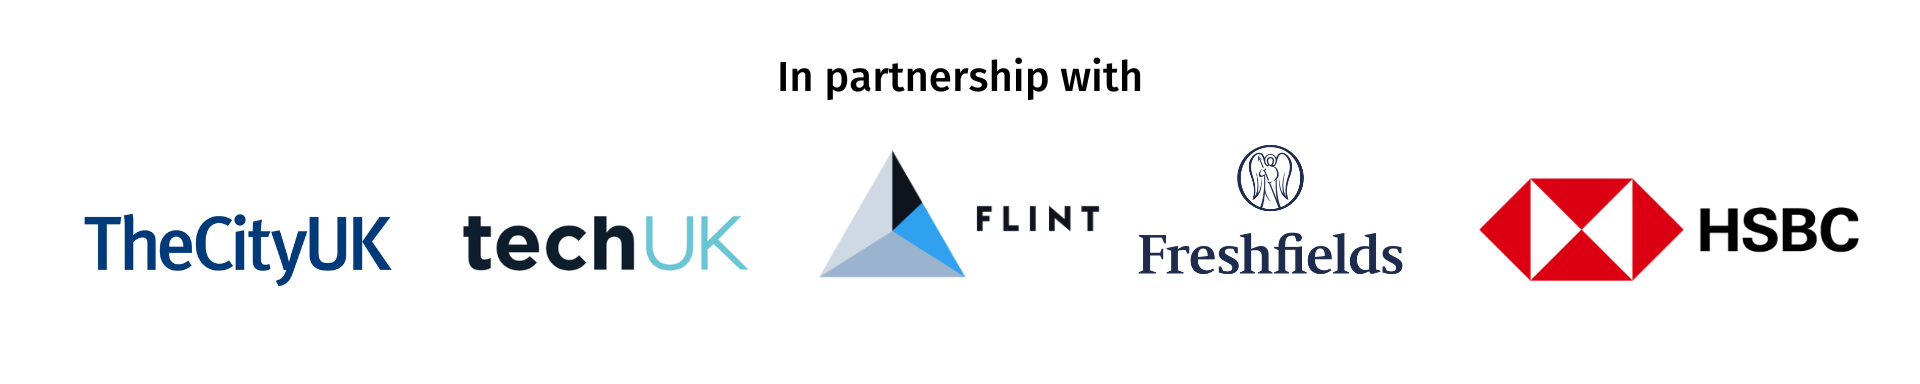 Logos of The CityUK, techUK, Flint, Freshfields and HSBC